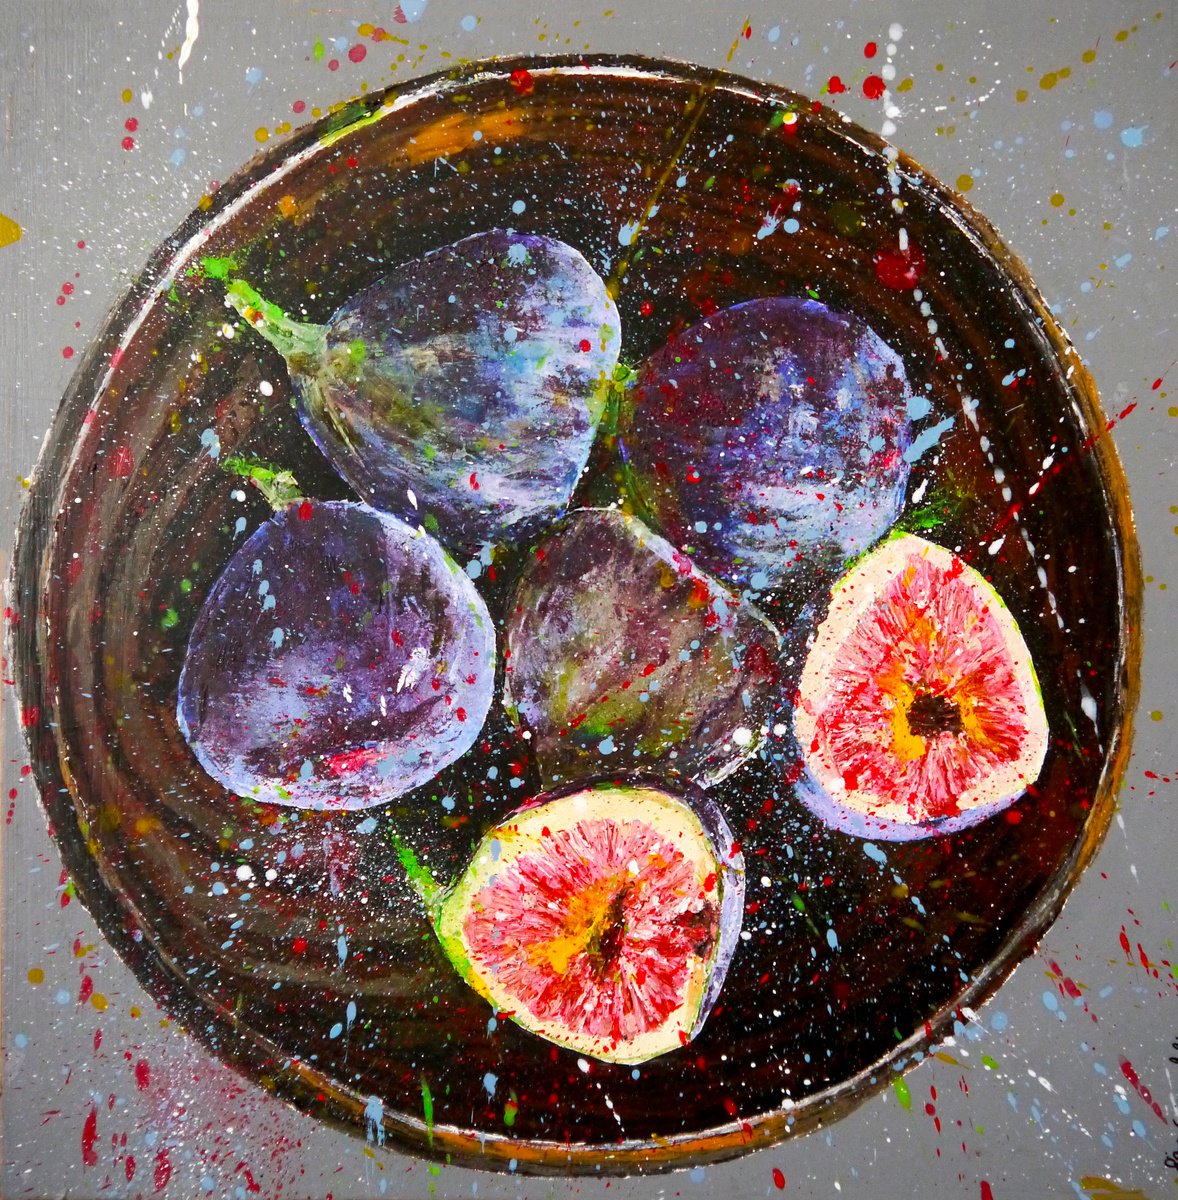 Figs Starwars bowl - Still life - POP Abtract Original by Bazevian DelaCapucinire